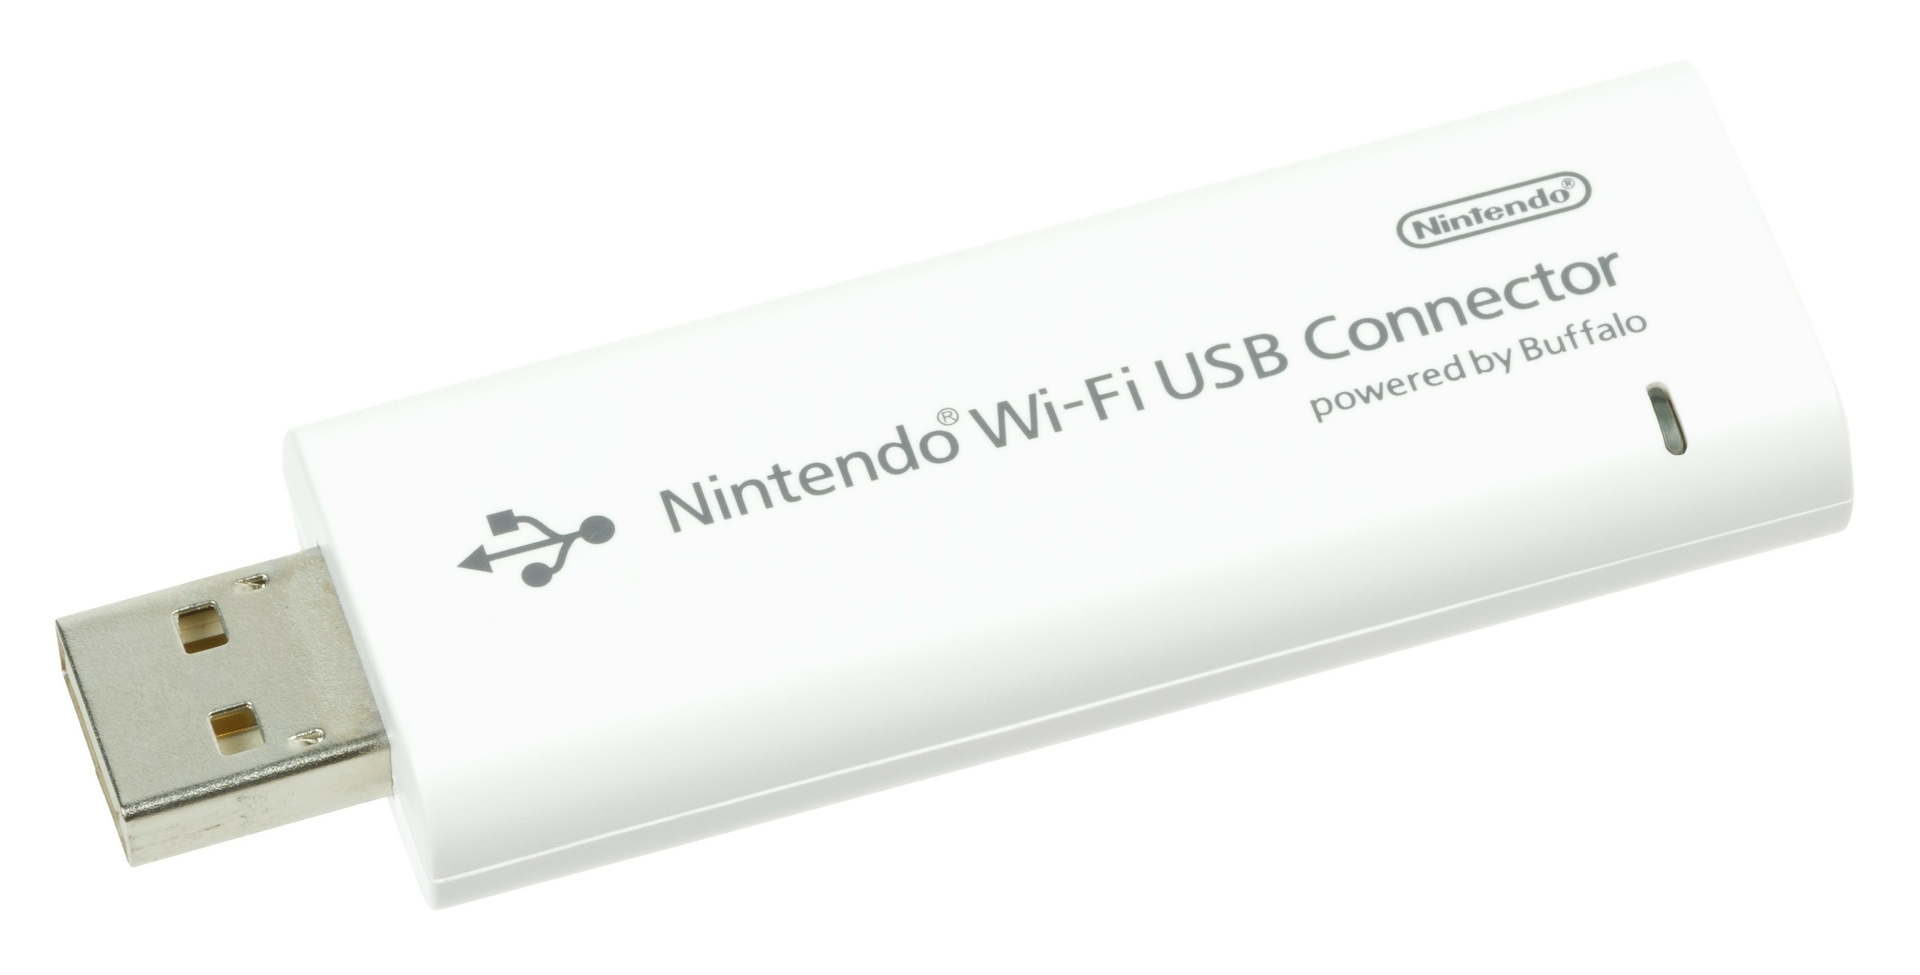 Nintendo Wi-Fi USB Connector - Nintendo 3DS Hardware